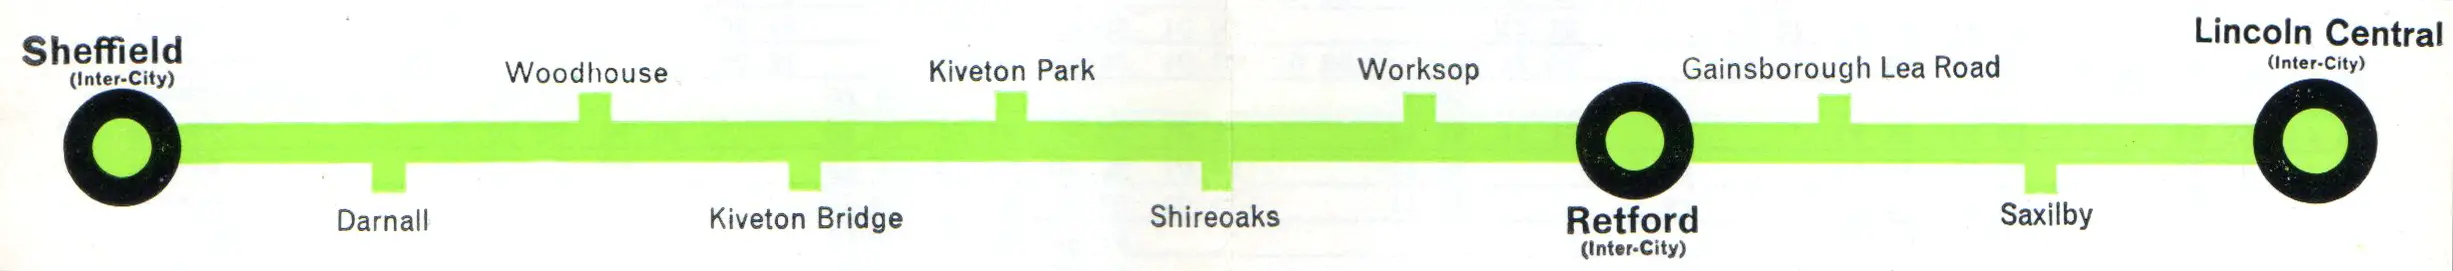 Lincoln - Sheffield route diagram